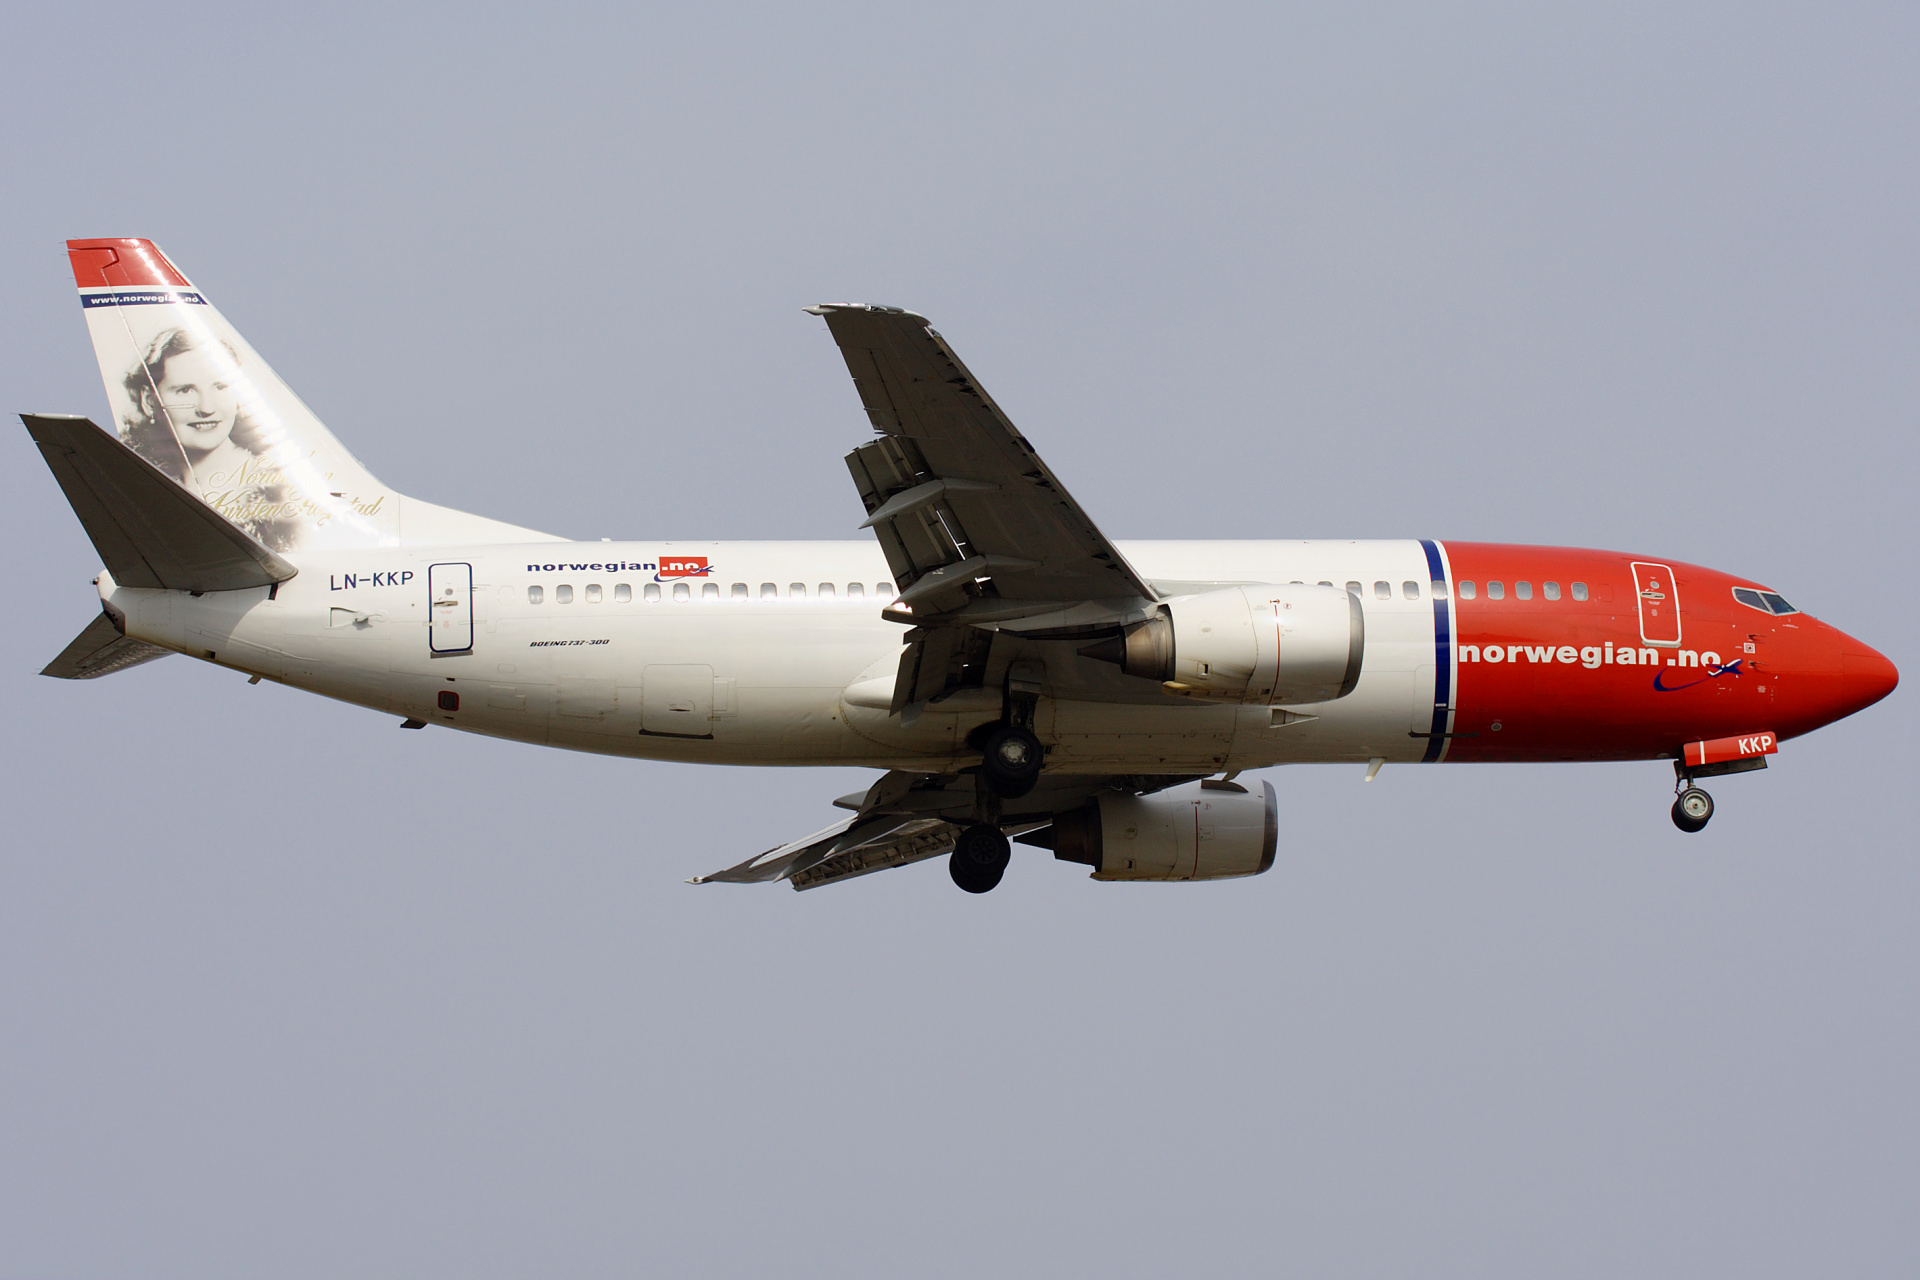 LN-KKP (Aircraft » EPWA Spotting » Boeing 737-300 » Norwegian Air Shuttle)